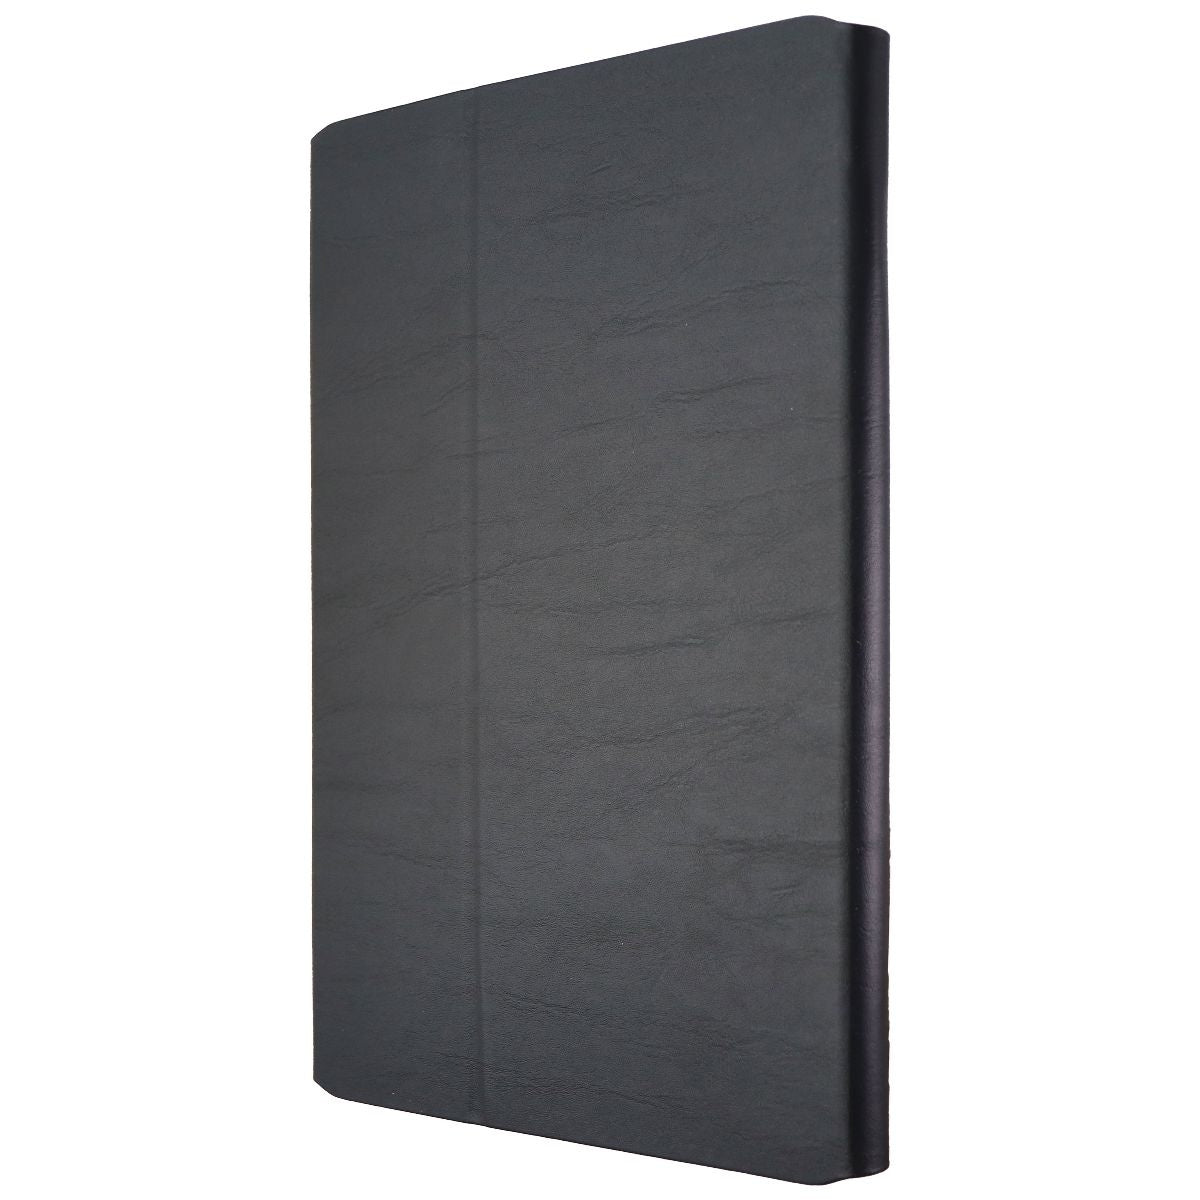 Incipio Faraday Folio Tablet Case for Samsung Galaxy Tab S7 / Tab S7 5G - Black iPad/Tablet Accessories - Cases, Covers, Keyboard Folios Incipio    - Simple Cell Bulk Wholesale Pricing - USA Seller